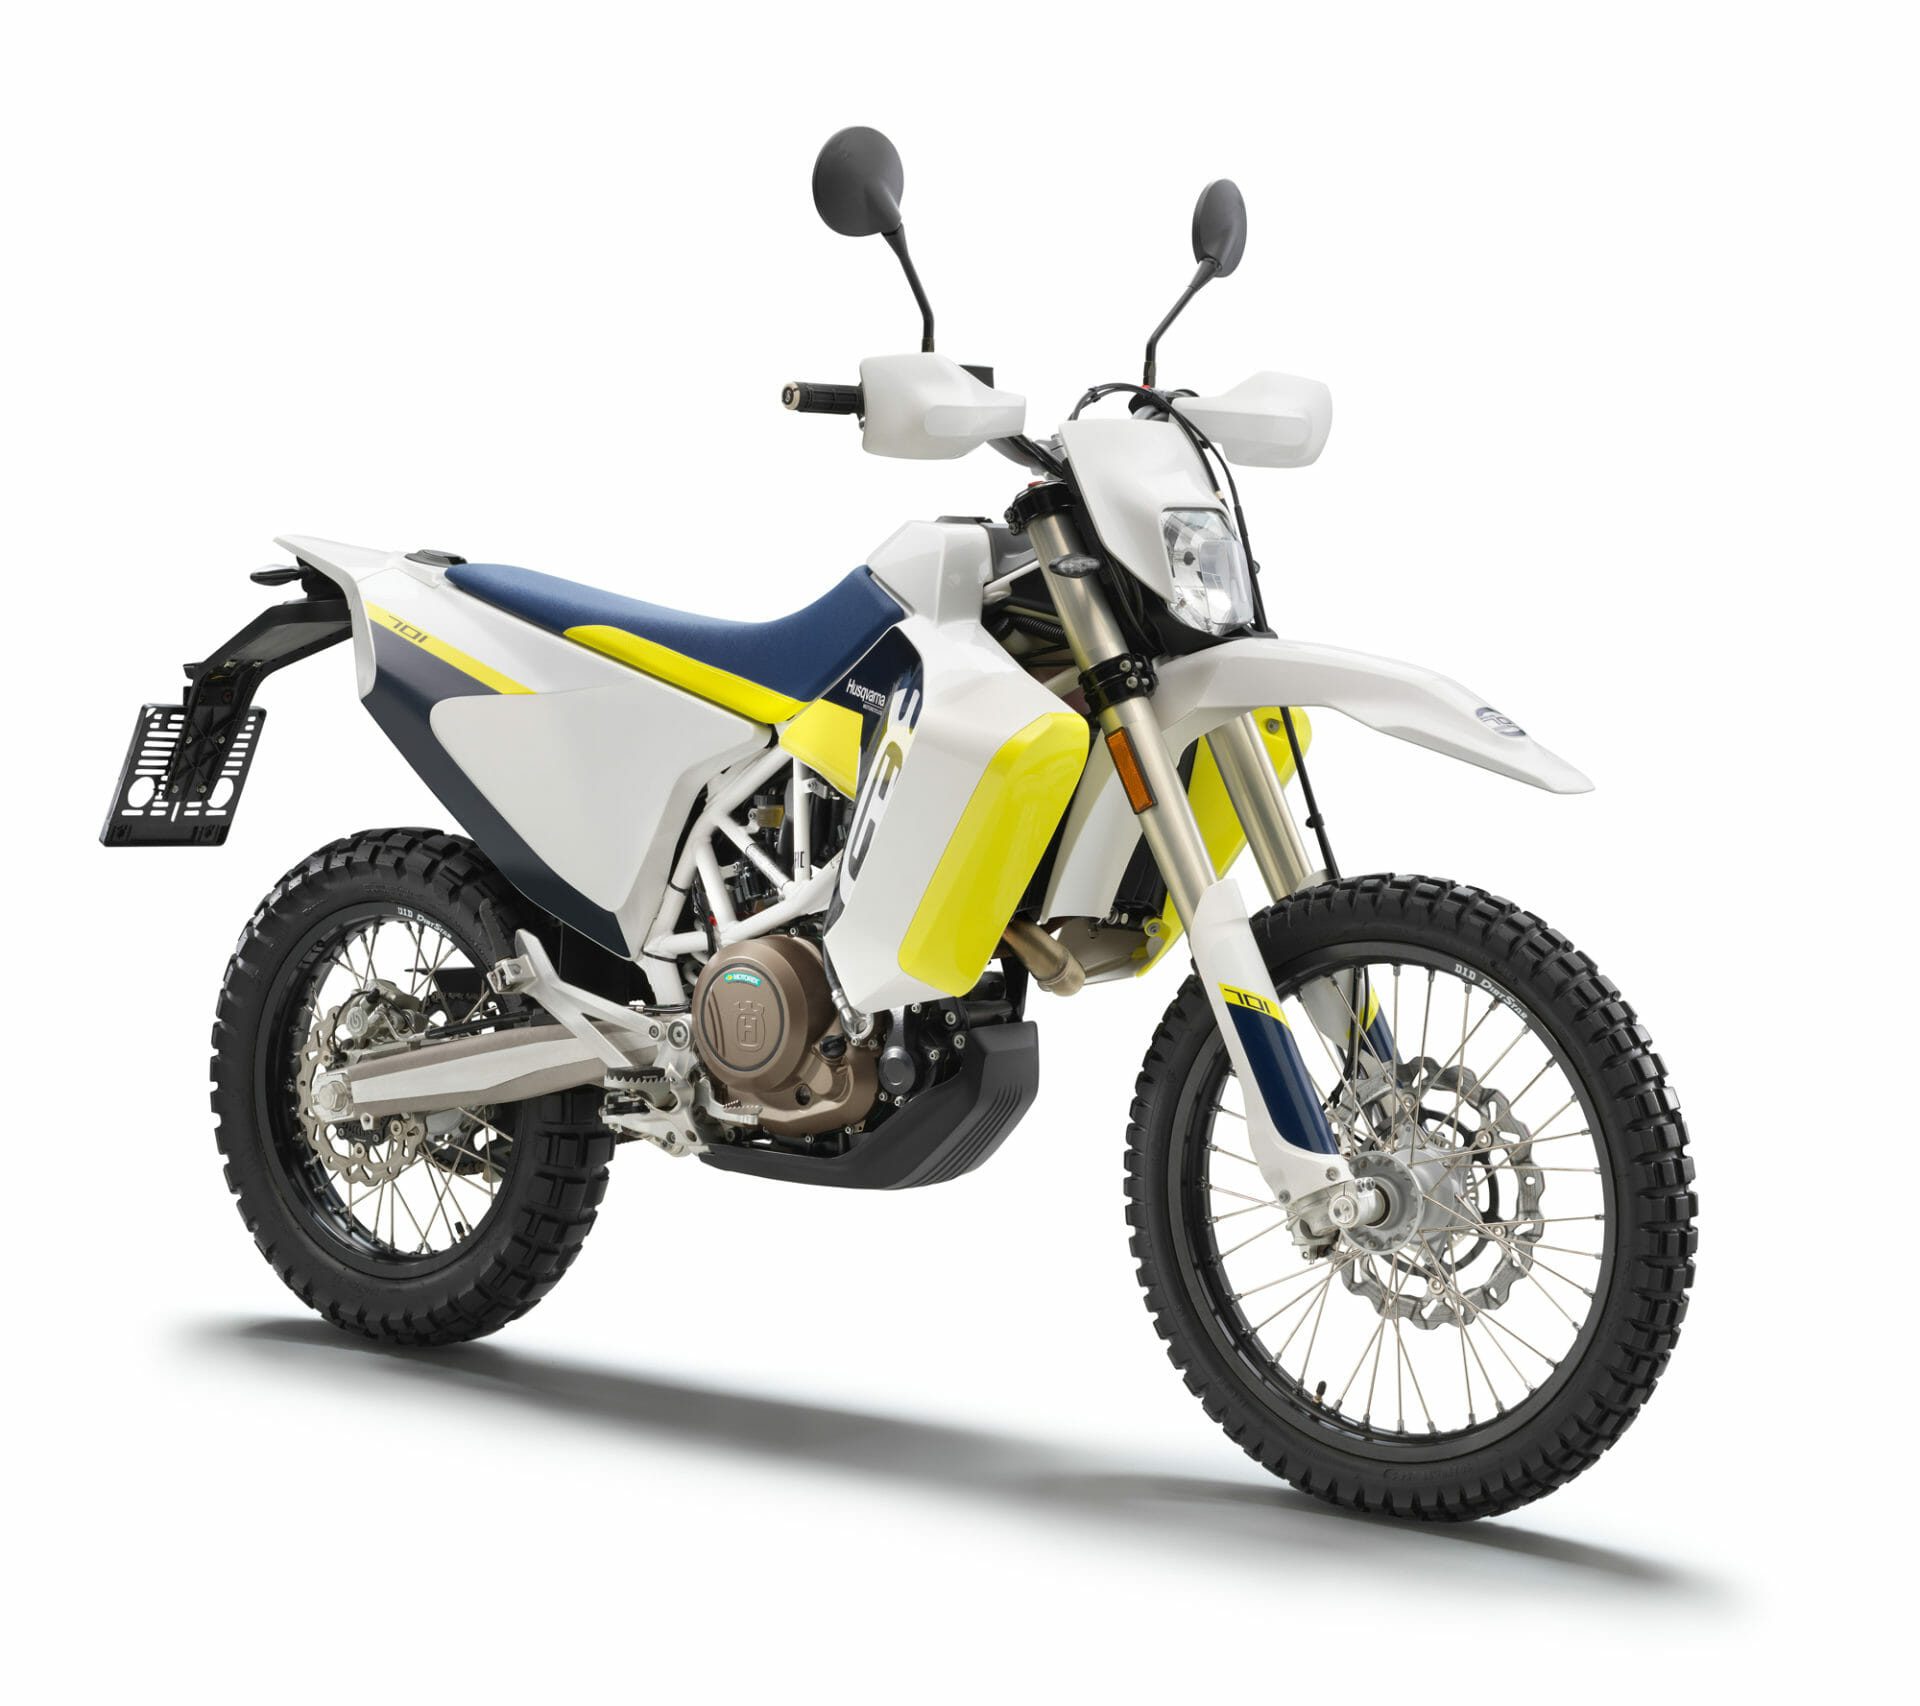 Husqvarna-701-Enduro-Motorcycle-News-App-Motorrad-Nachrichten-App-MotorcyclesNews-26